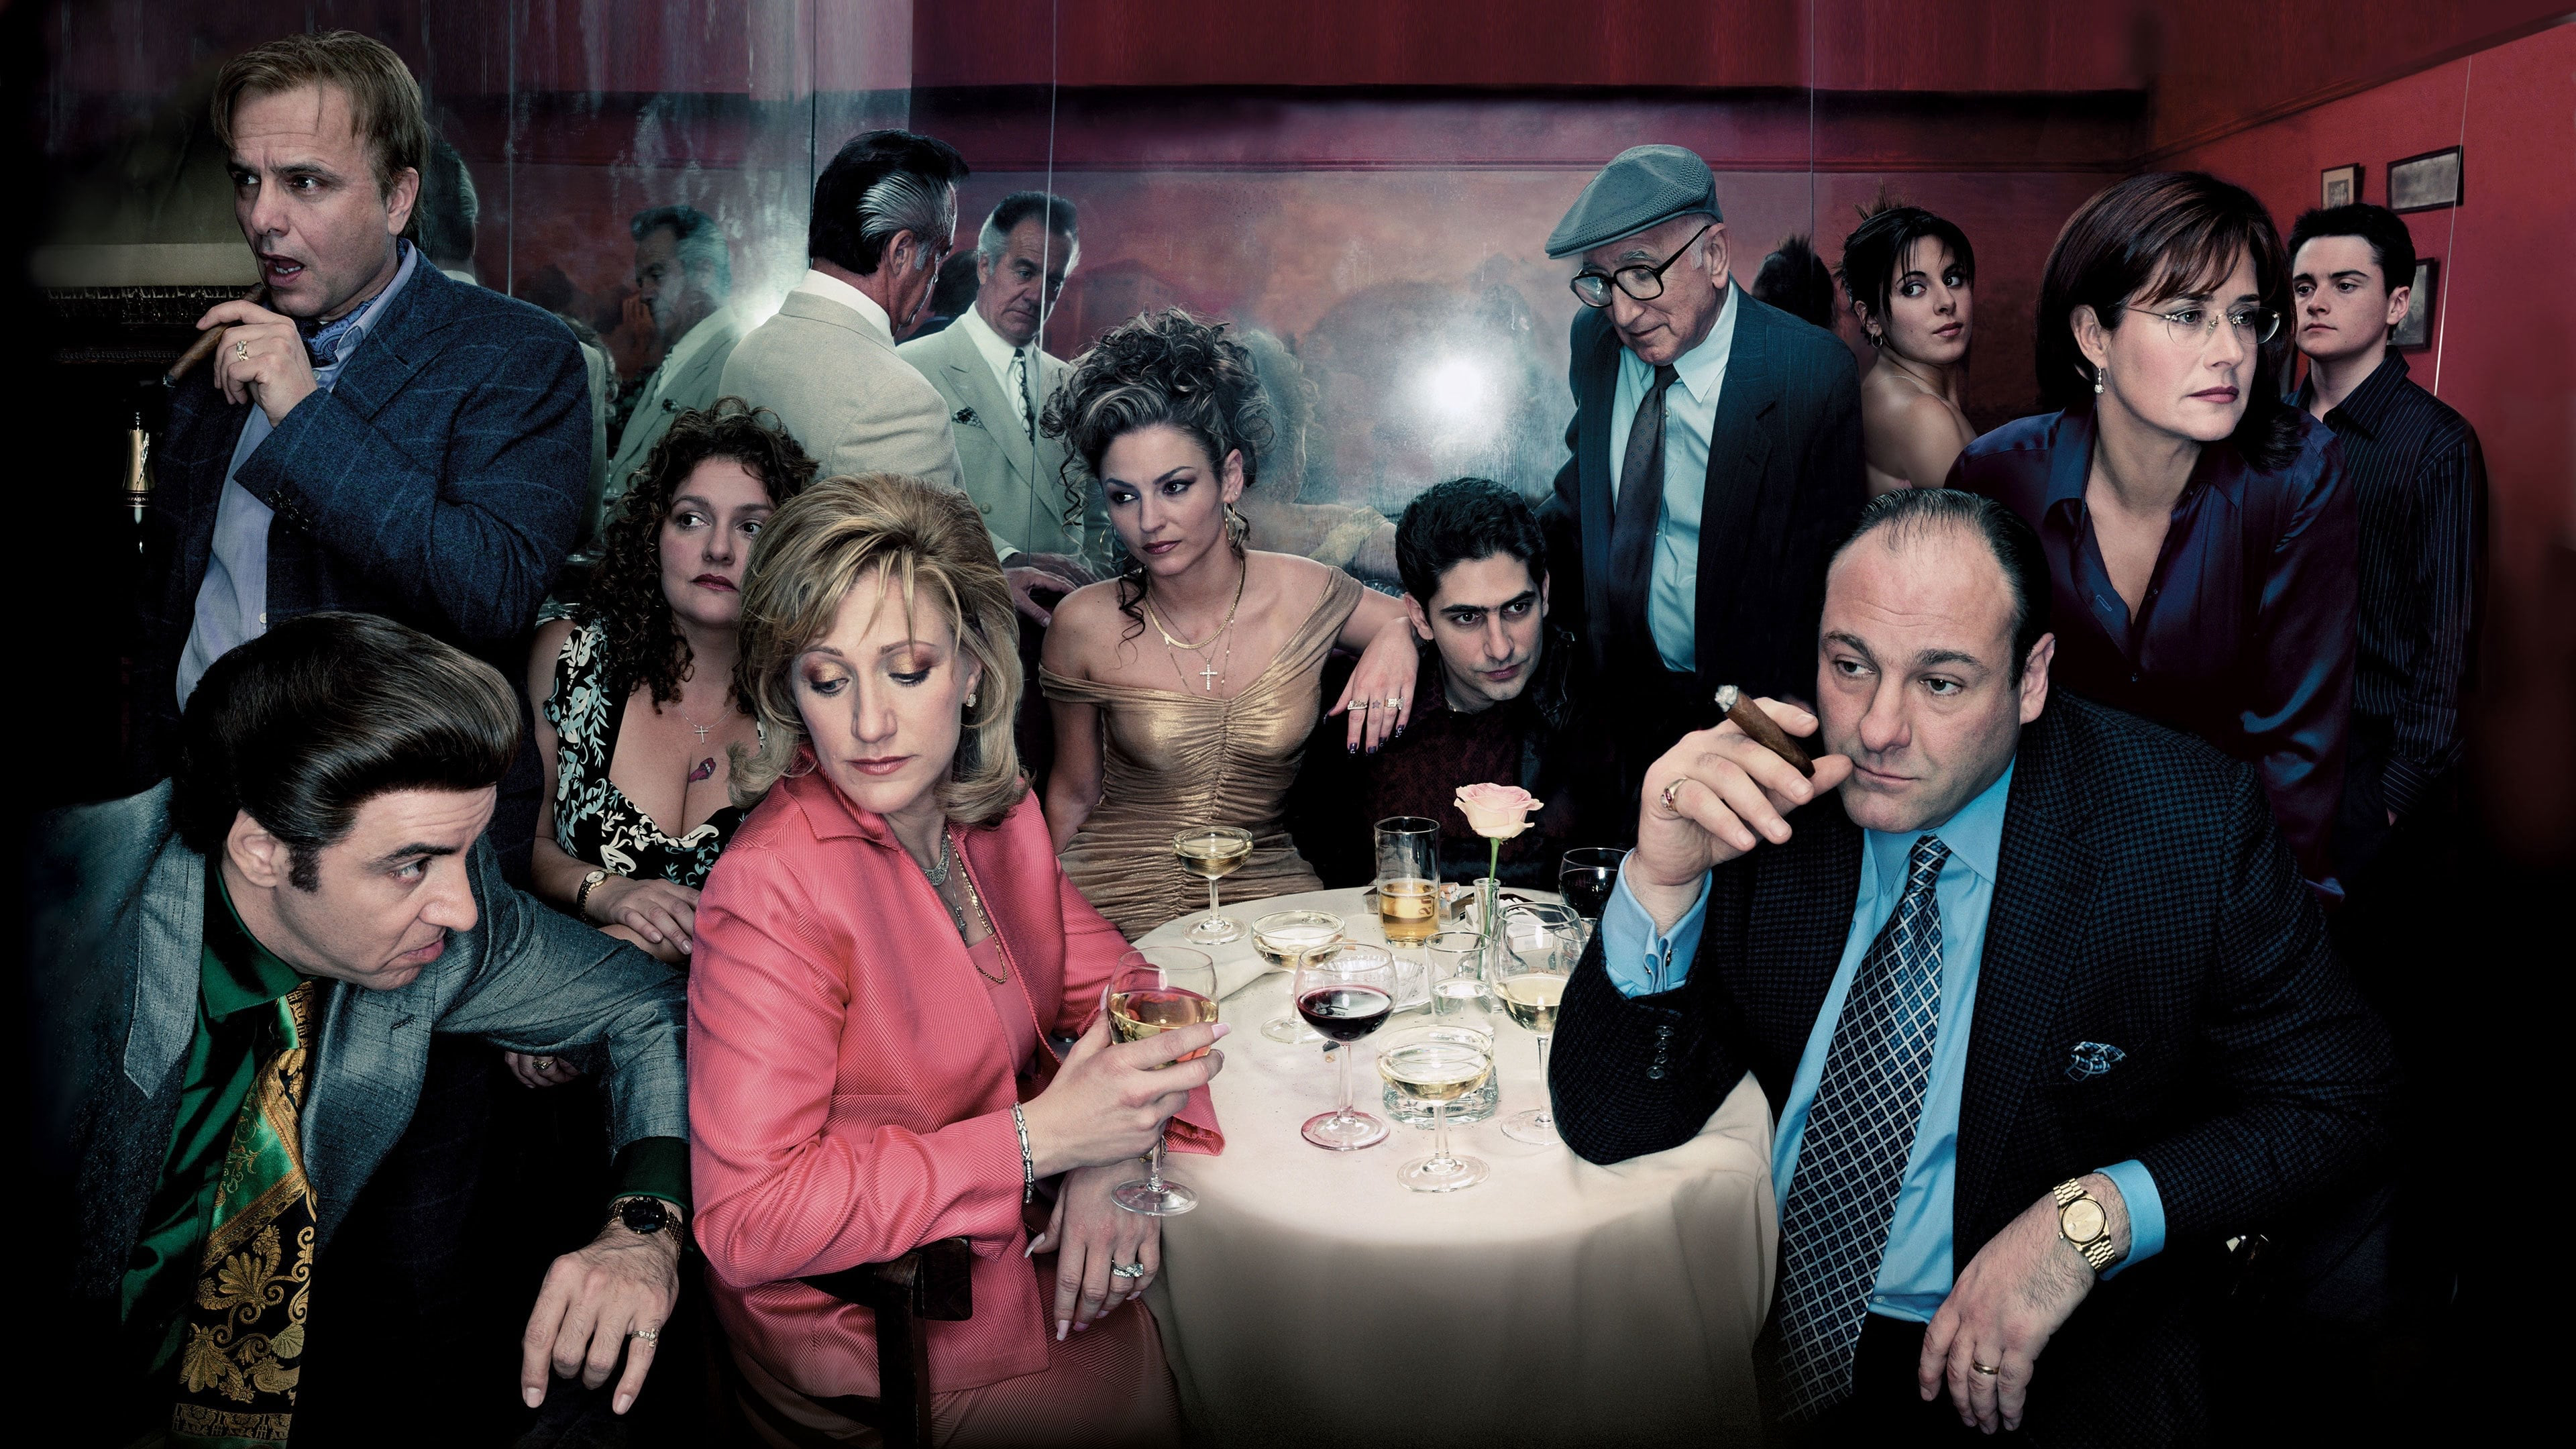 The Sopranos (Season 4) / The Sopranos (Season 4) (2002)